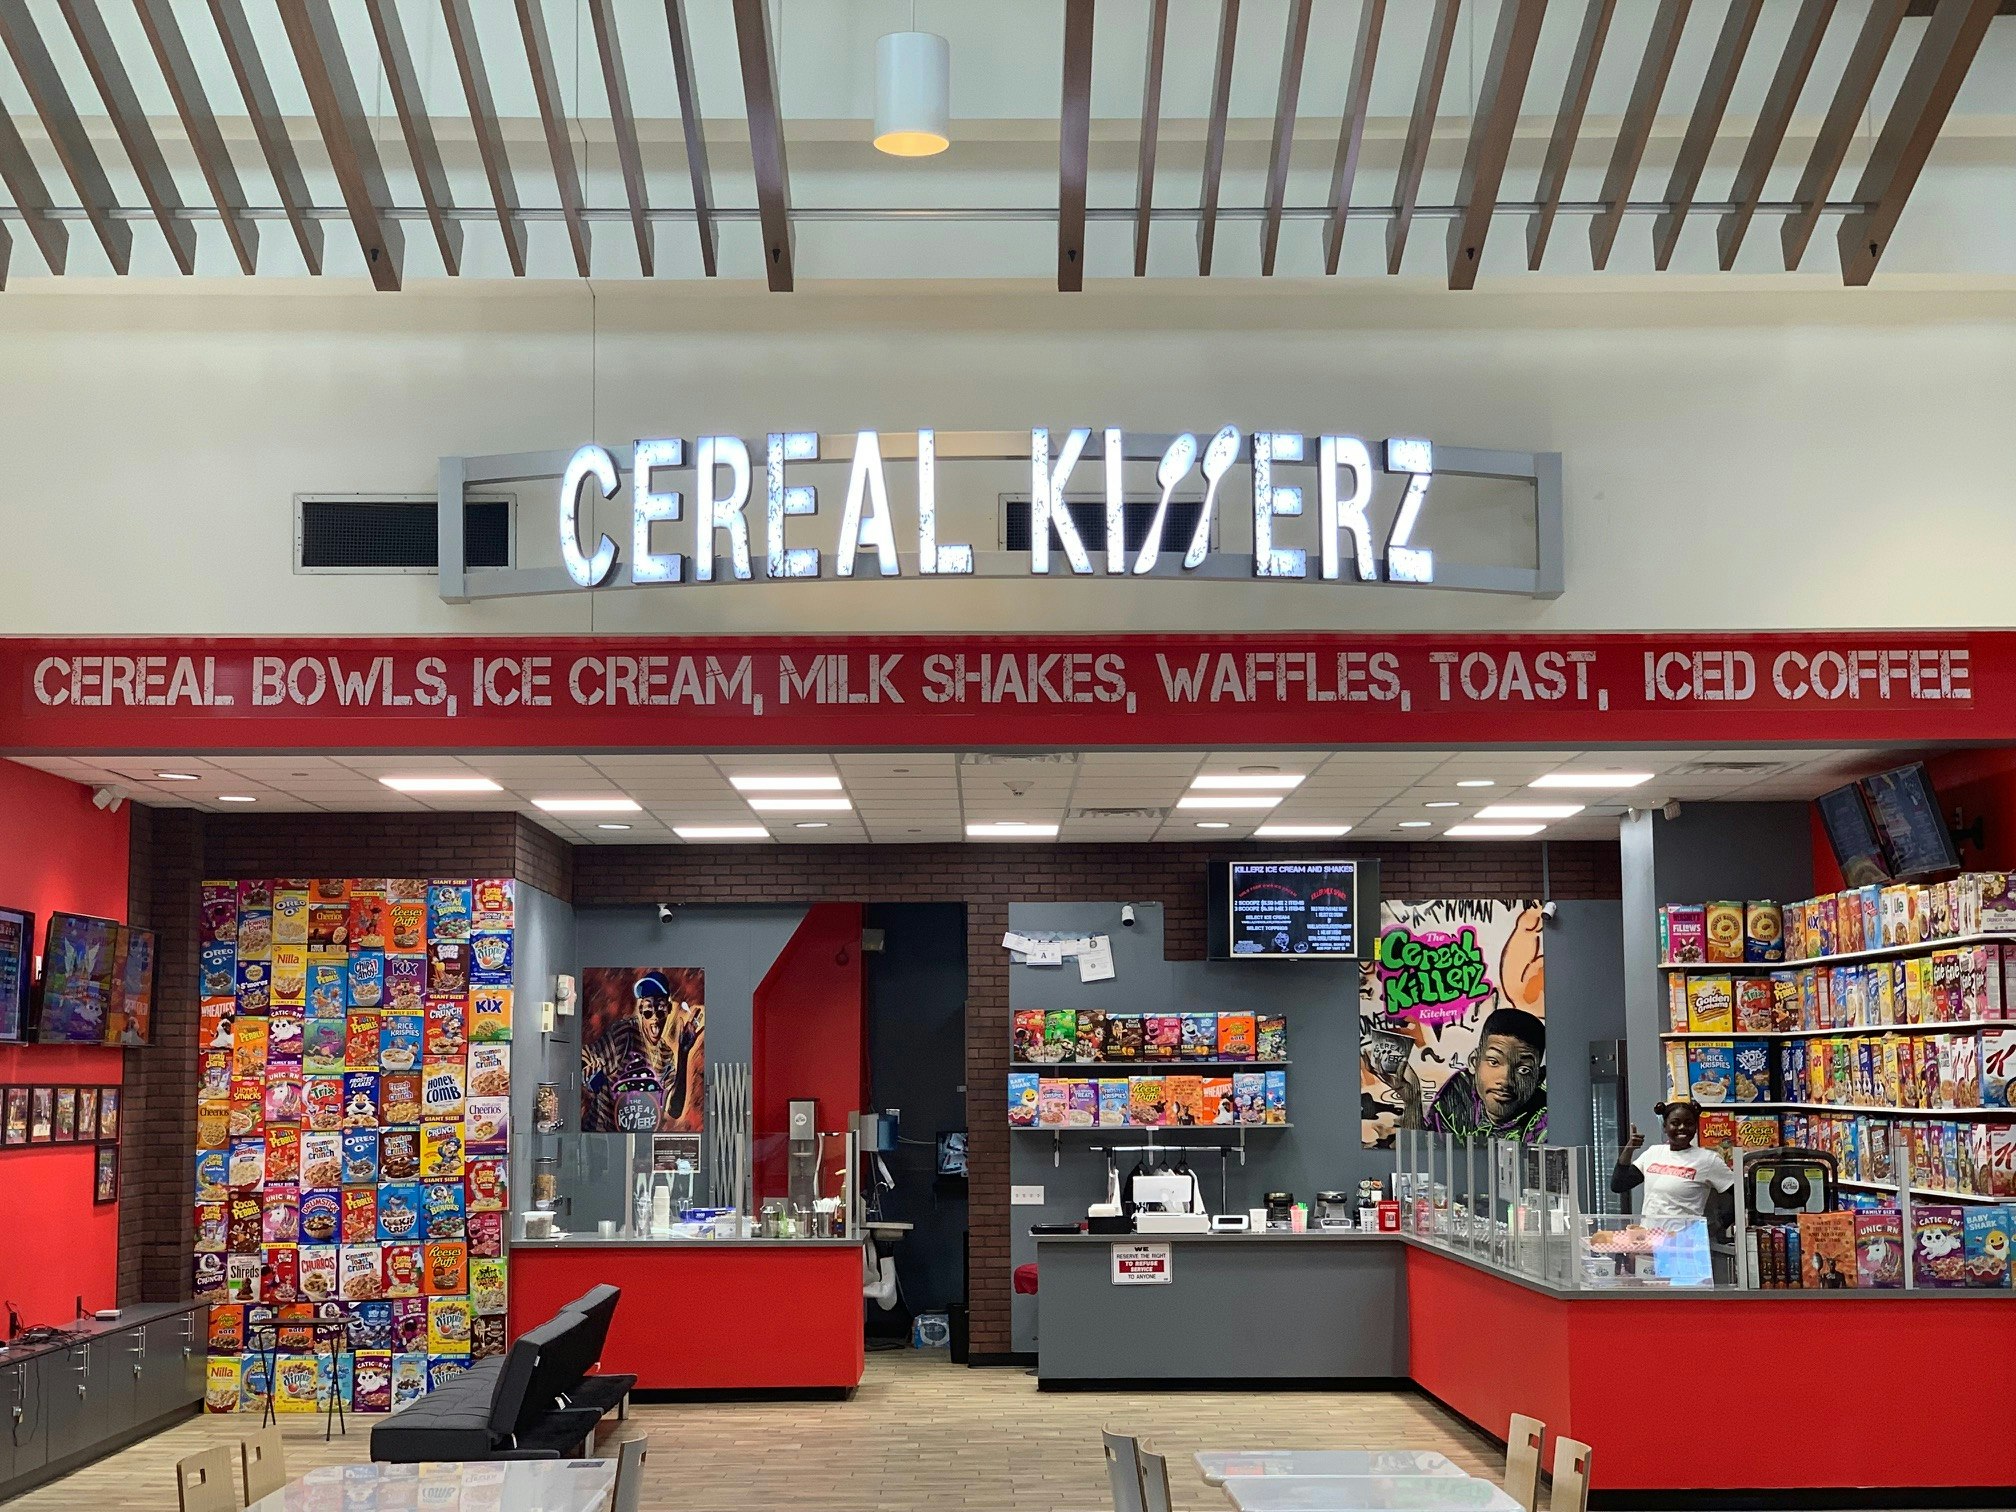 The Cereal Killerz store in Las Vegas